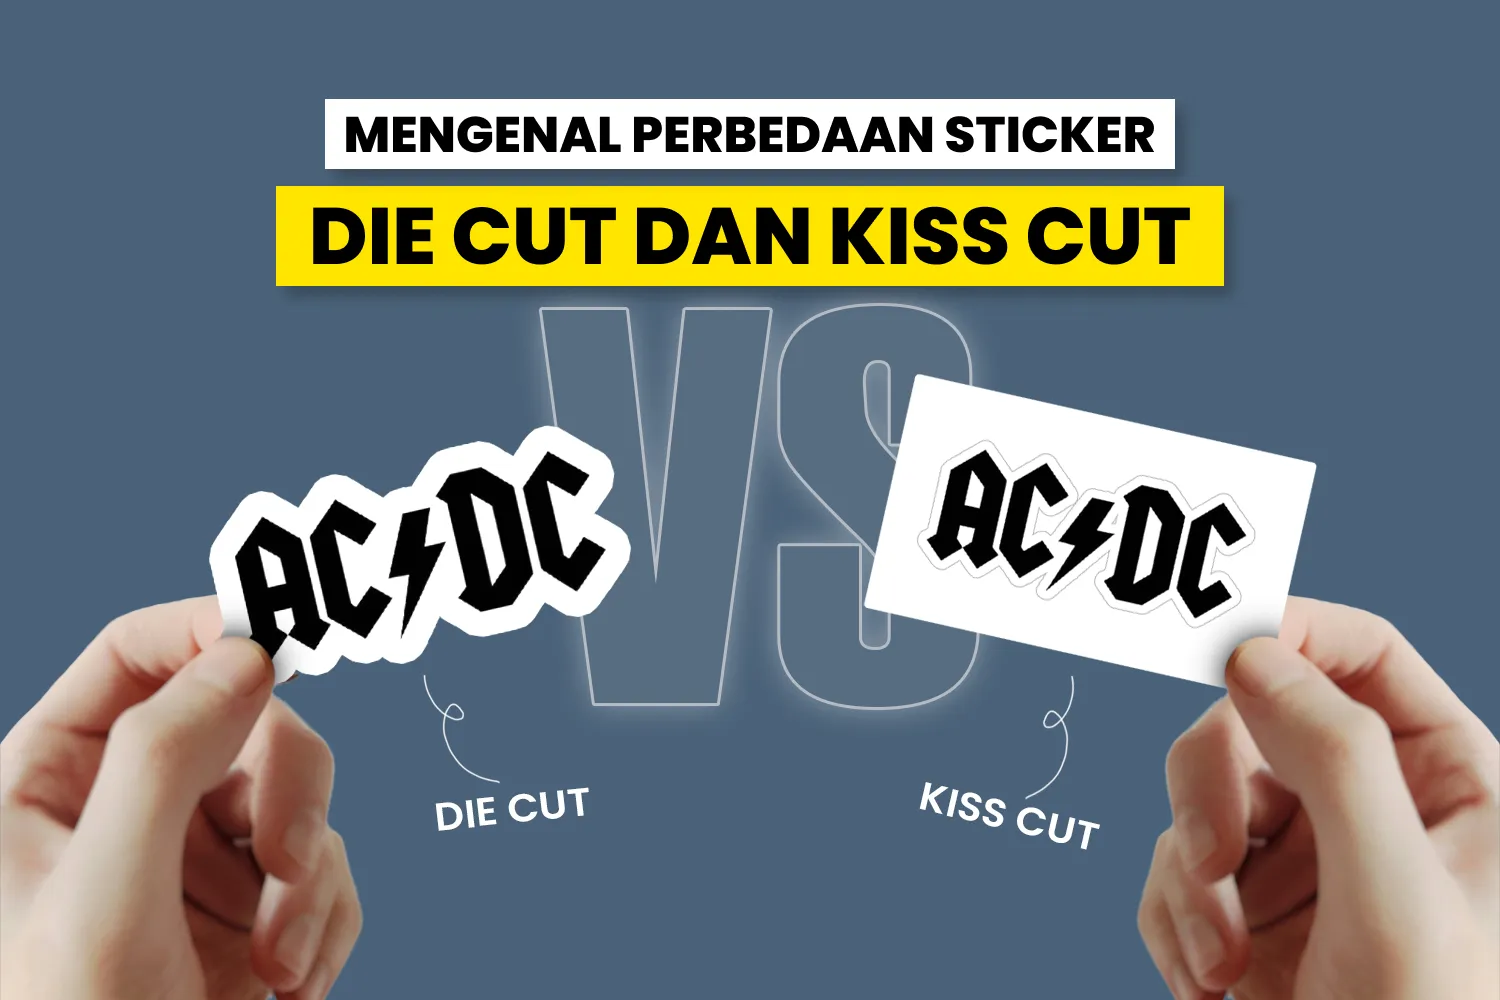 Hasil Cutting Sticker Die Cut Dan Kiss Cut.